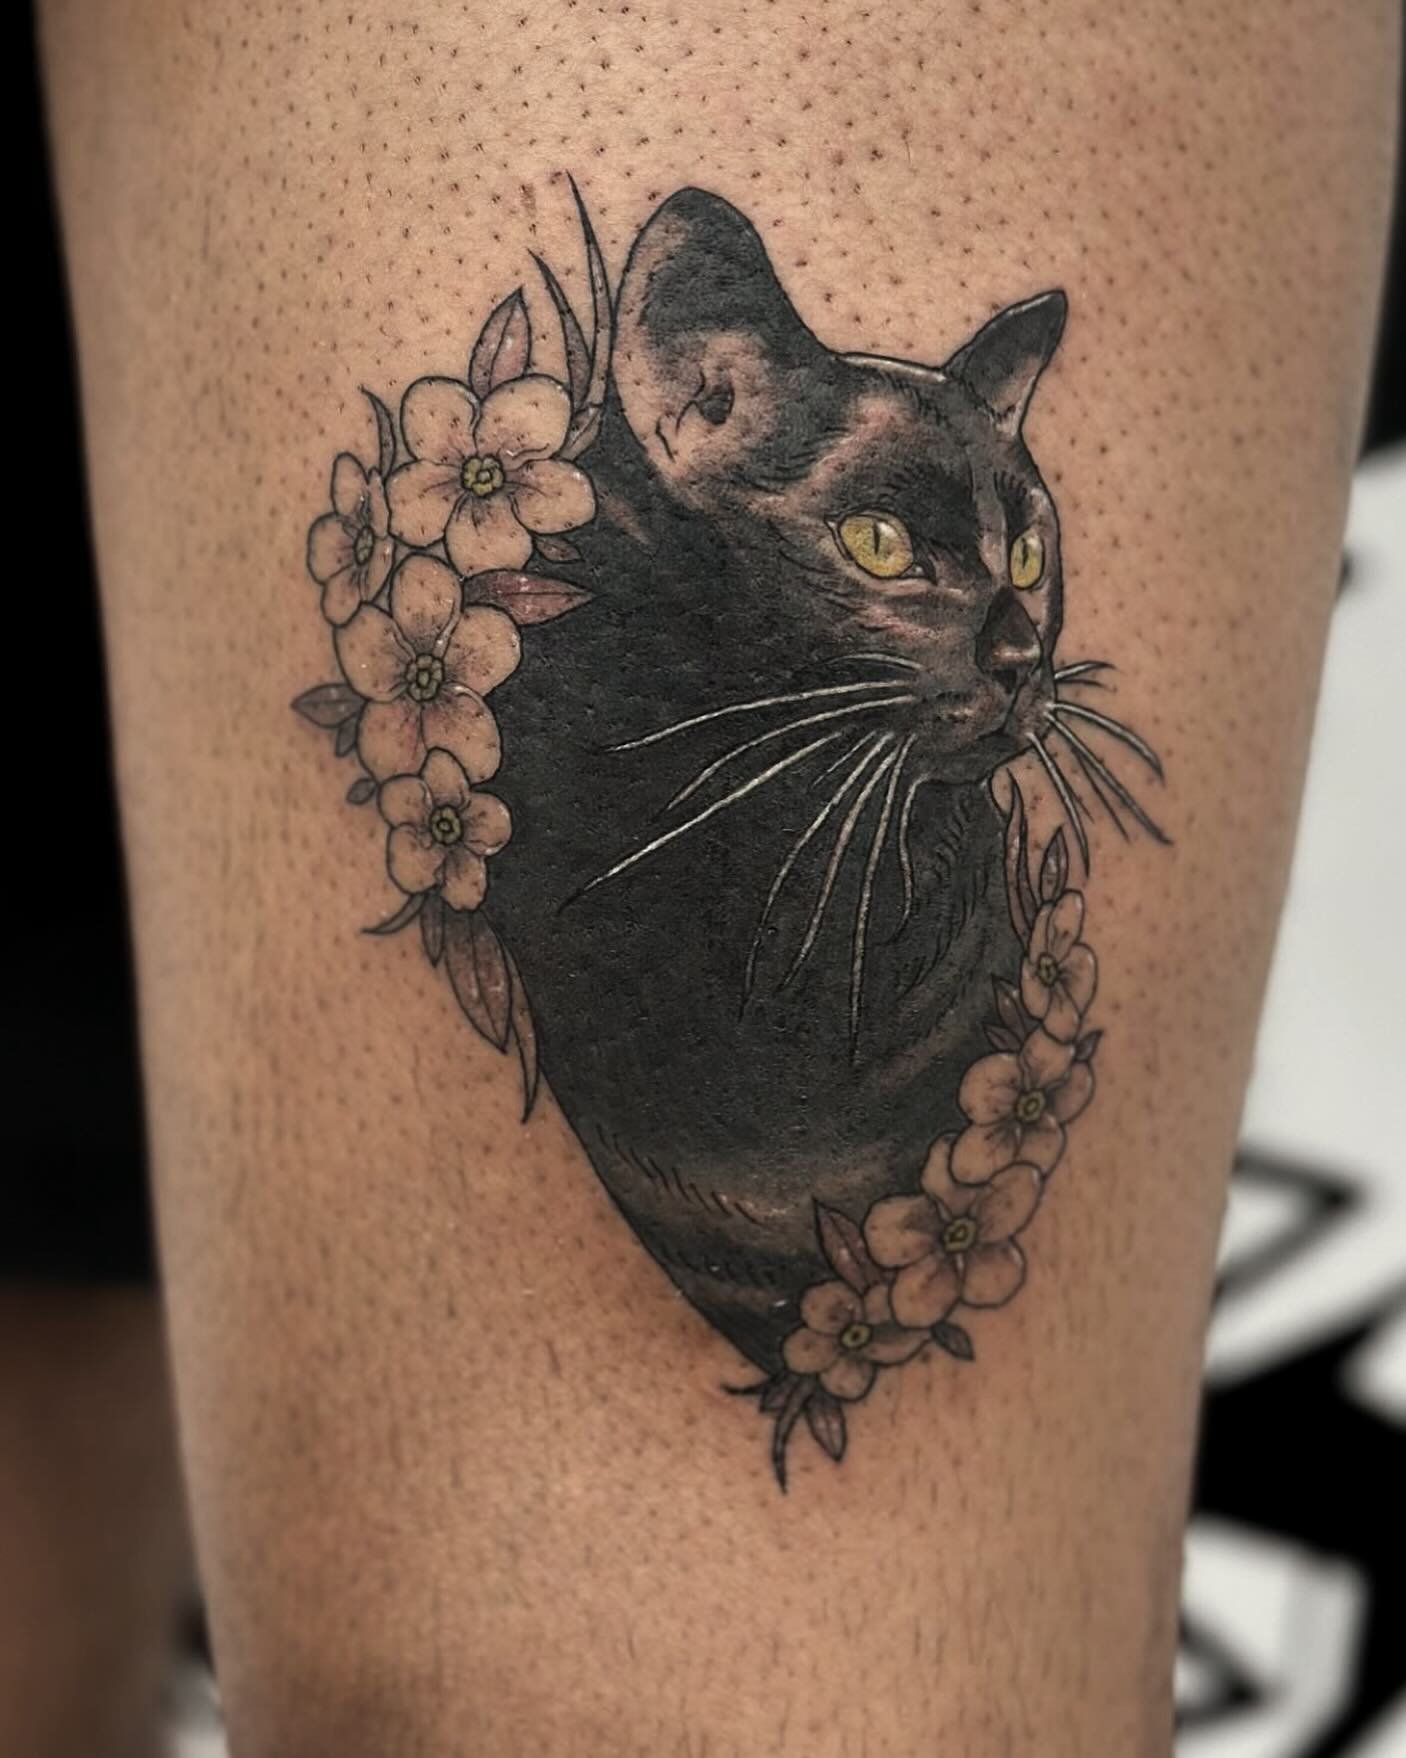 Black cat by Gia.

DM TO BOOK YOUR NEXT TATTOO OR HAIRCUT WITH US.

#tattoo #tattoos #tattooed  #tattooartist #tattooart #tattoolife  #instatattoo #tattooing #tattoodesign #2024 #tattooer #tattooflash #tattooink #tattooideas #guyswithtattoos #tattoos